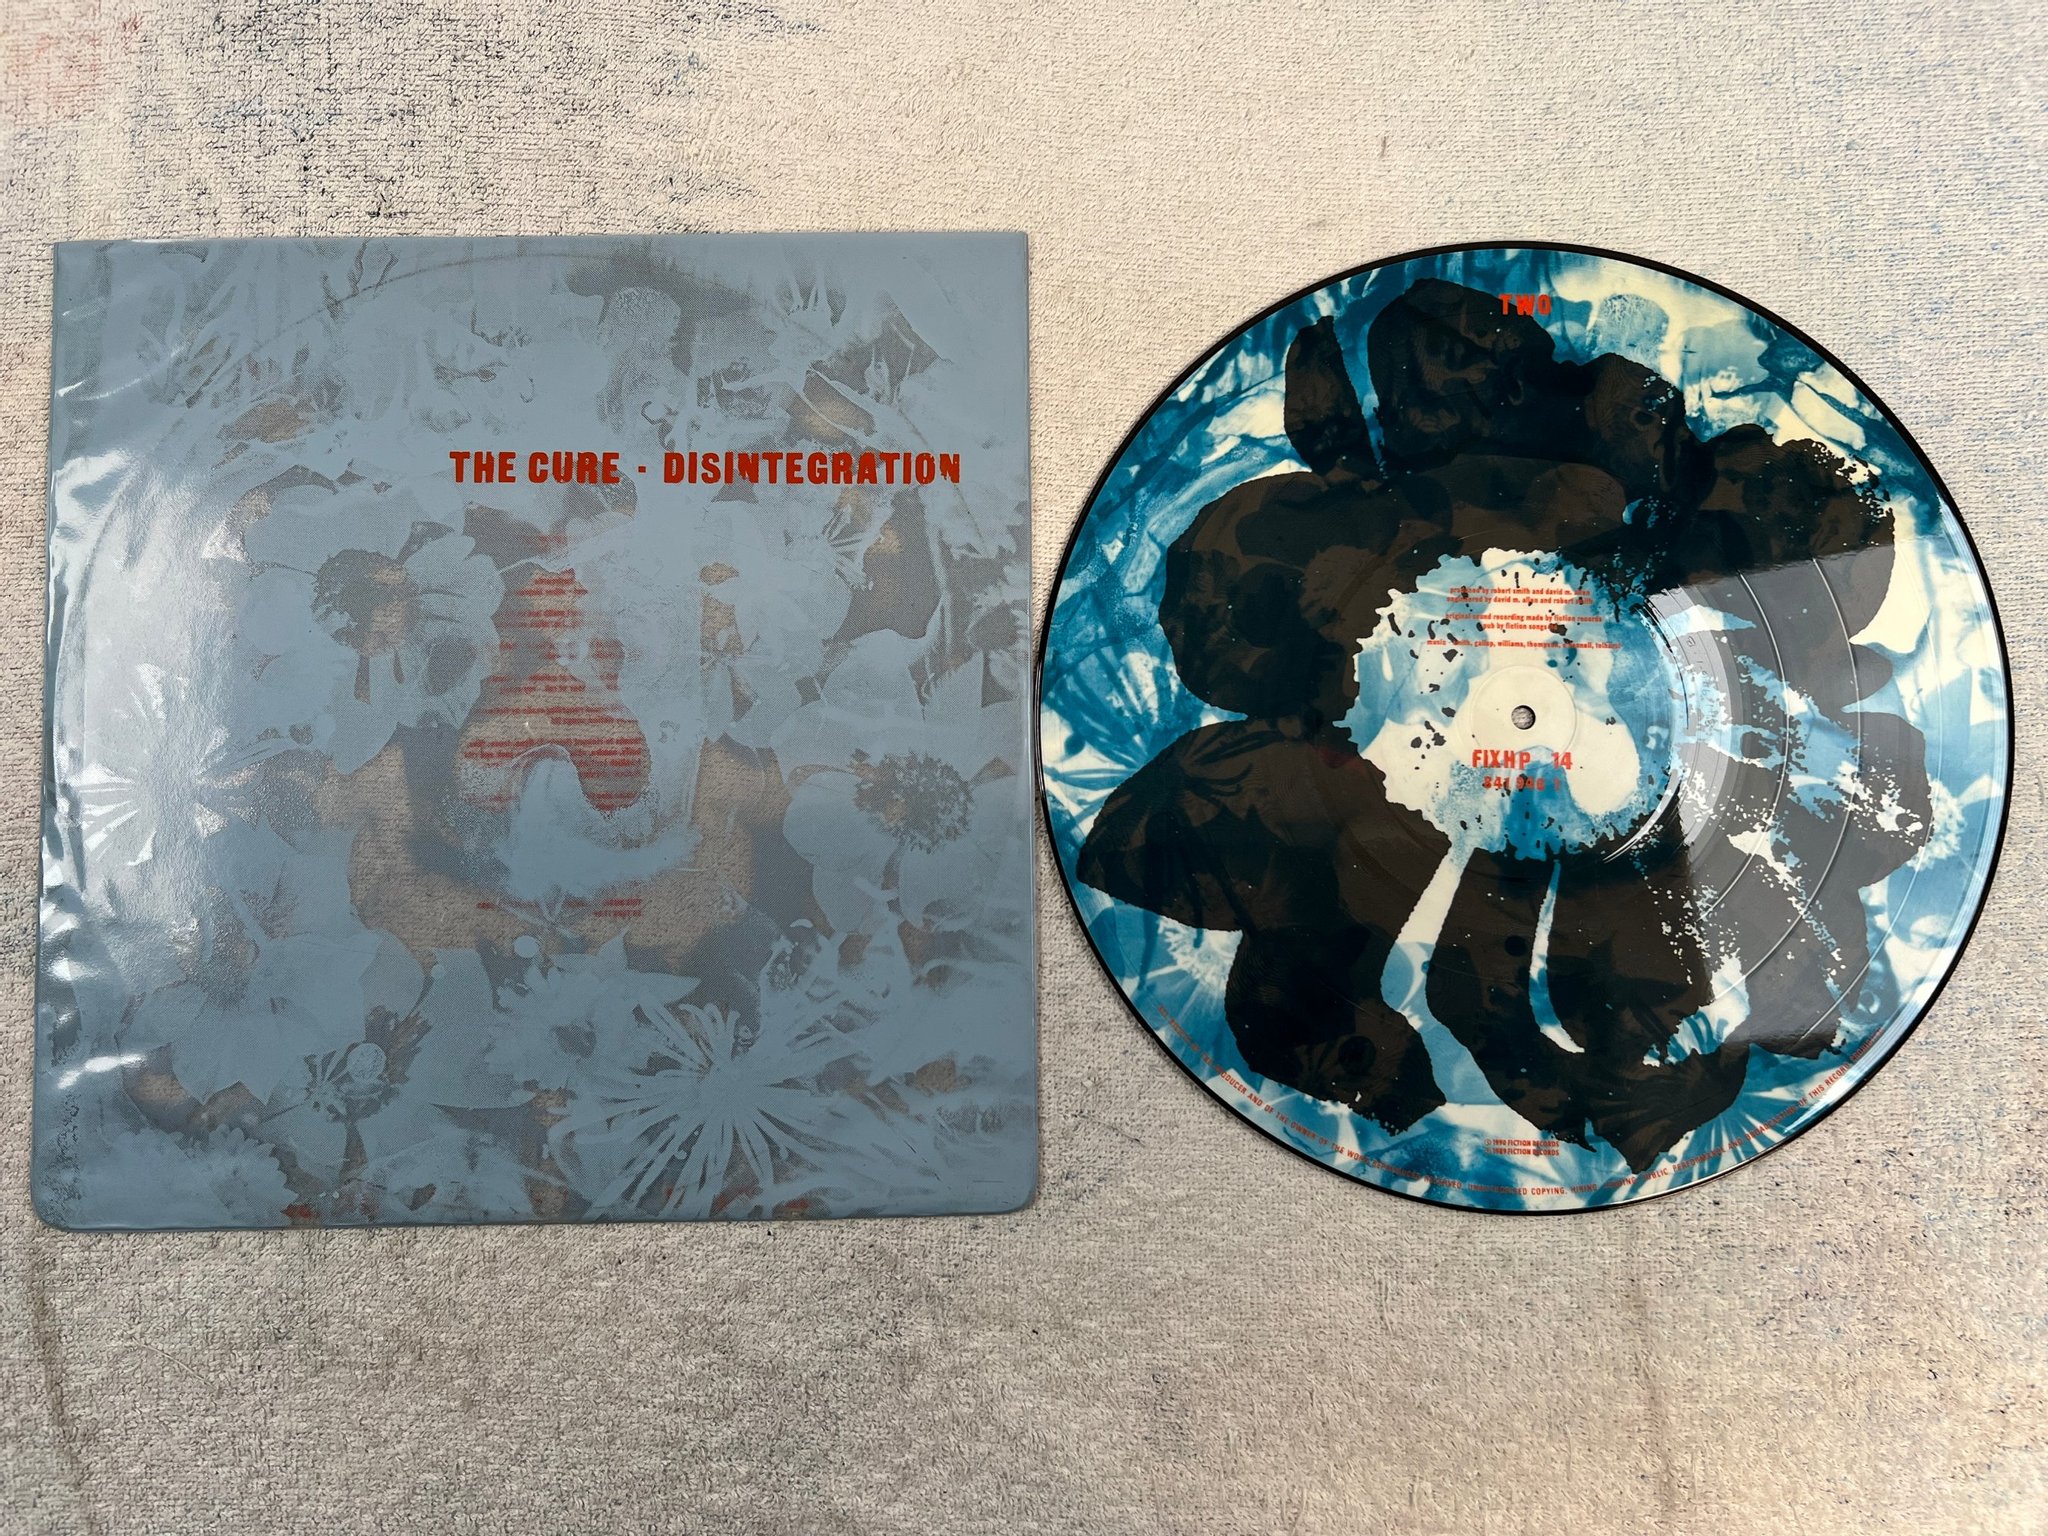 Omslagsbild för skivan THE CURE Disintegration LP picture disc -90 FICTION FIXHP 14 ** RARE **